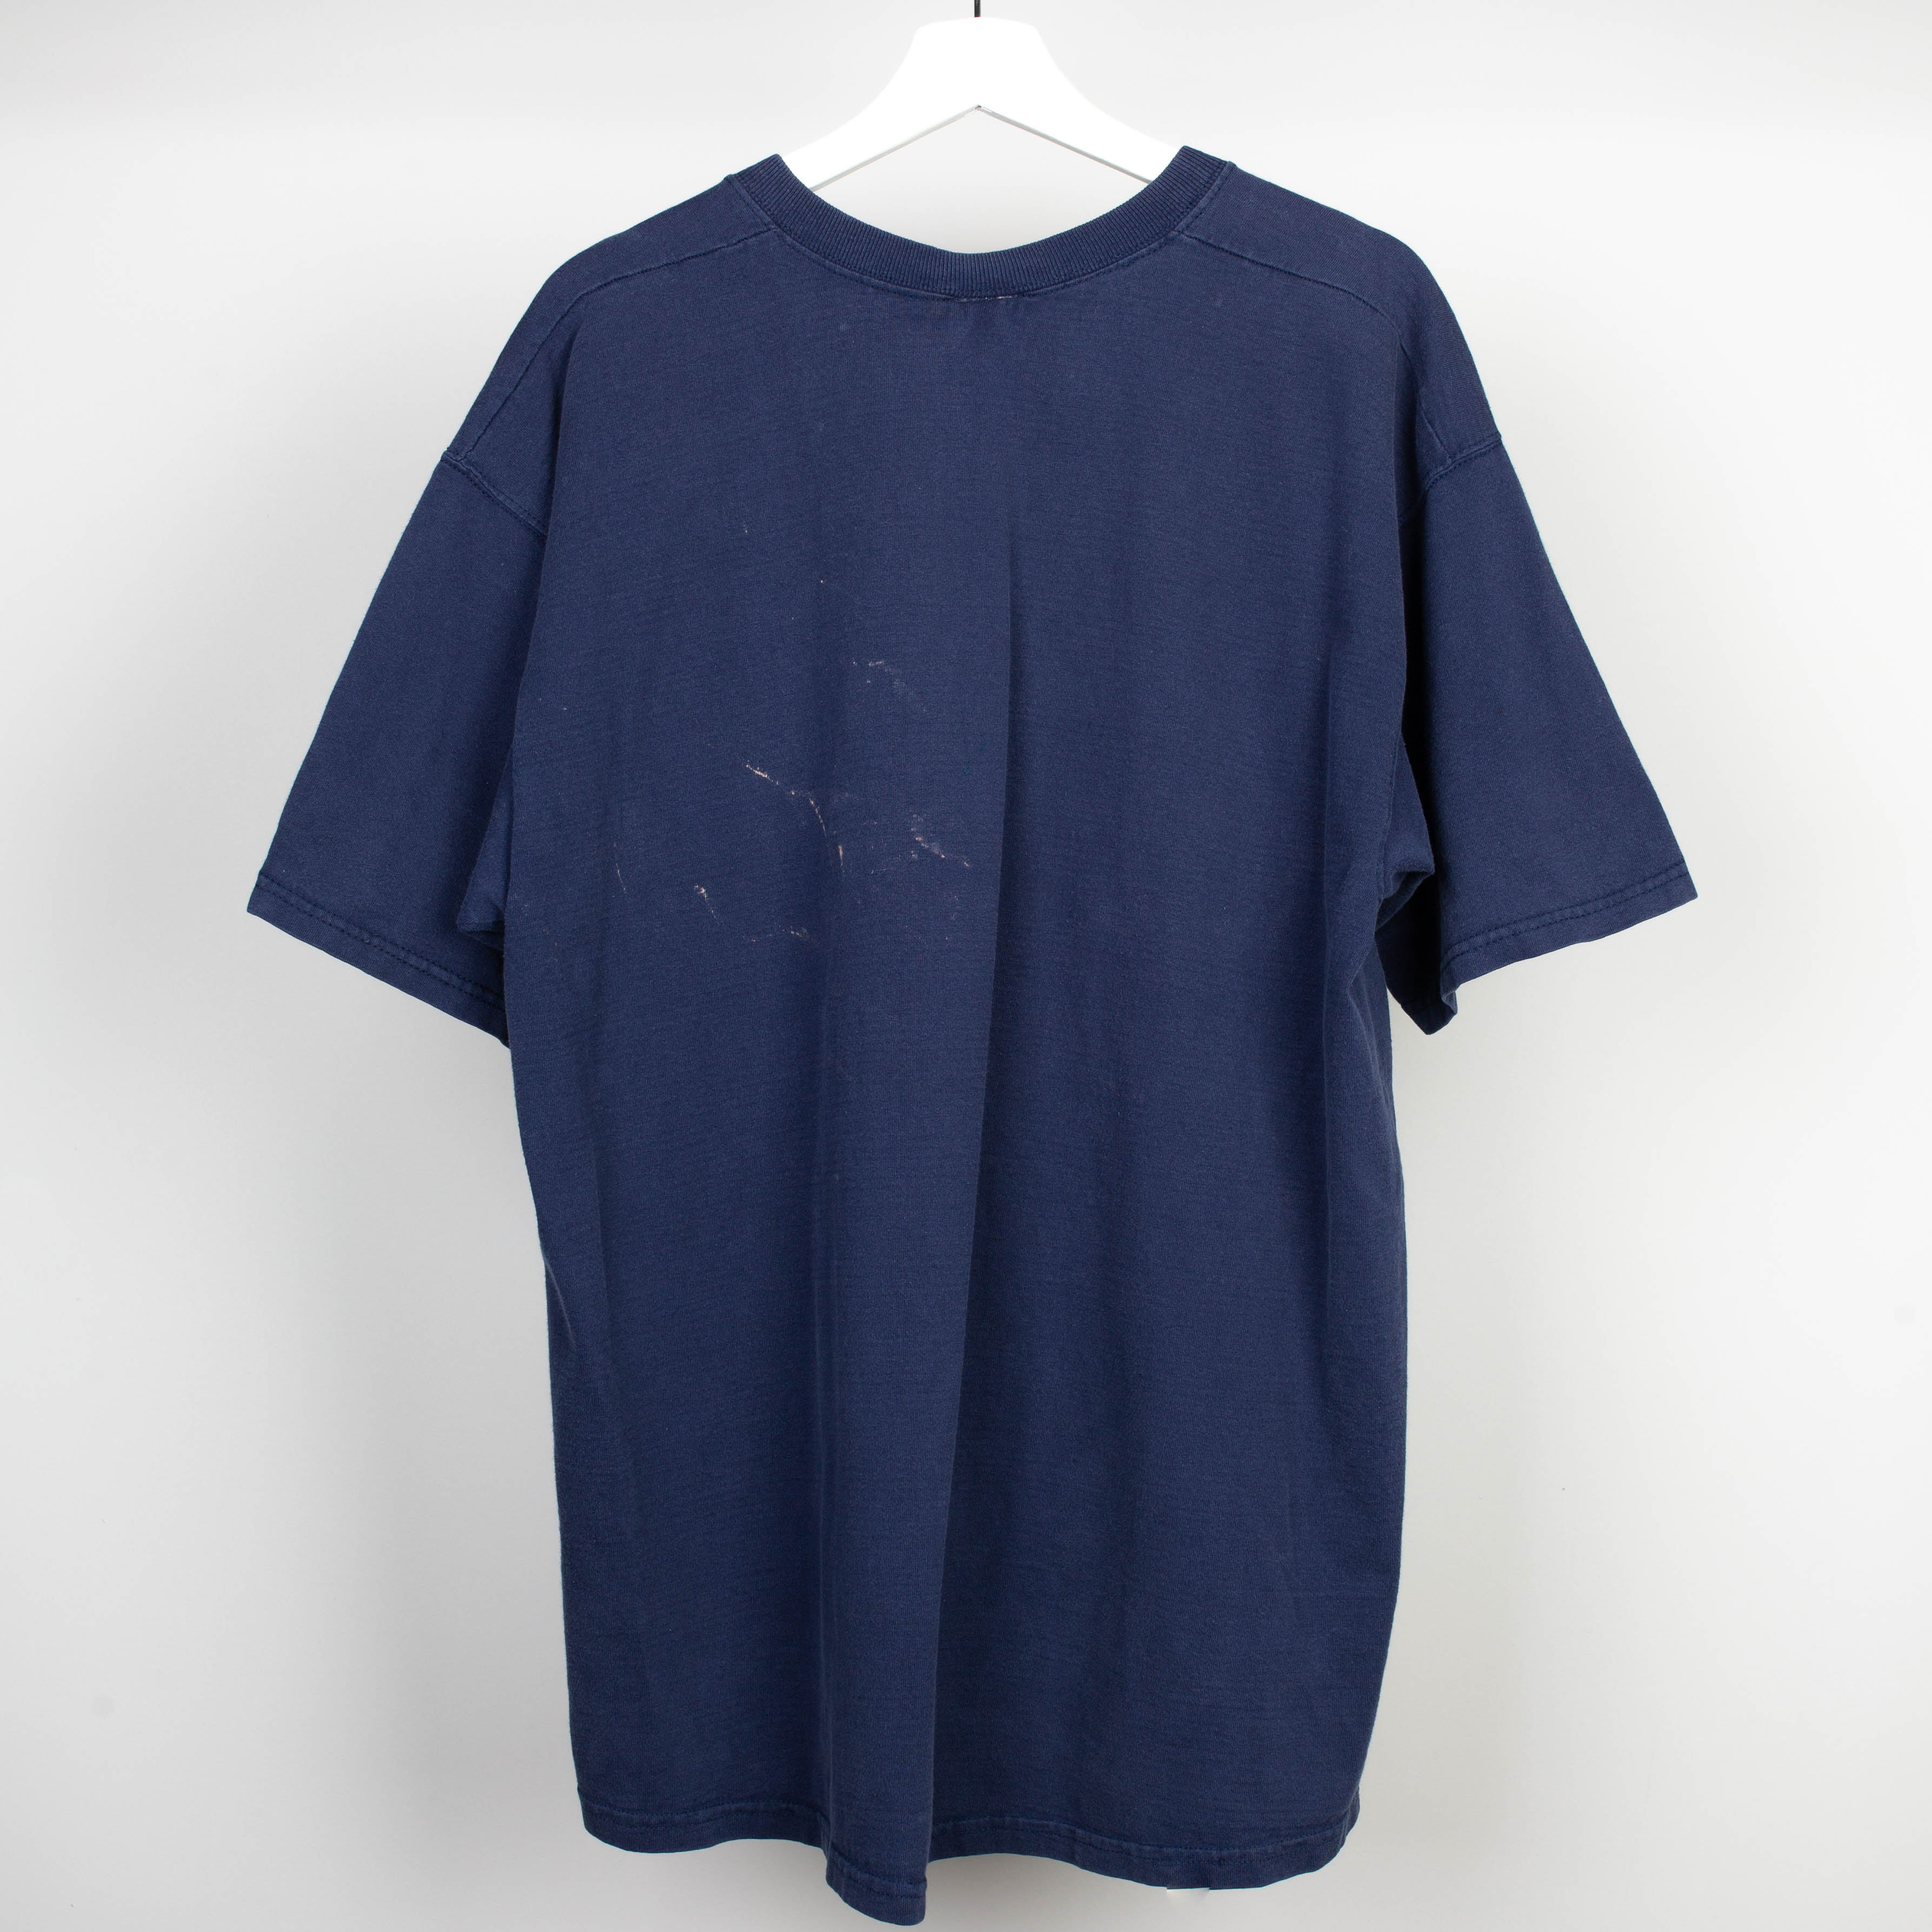 90's Wilson Athleticwear T-Shirt Size L